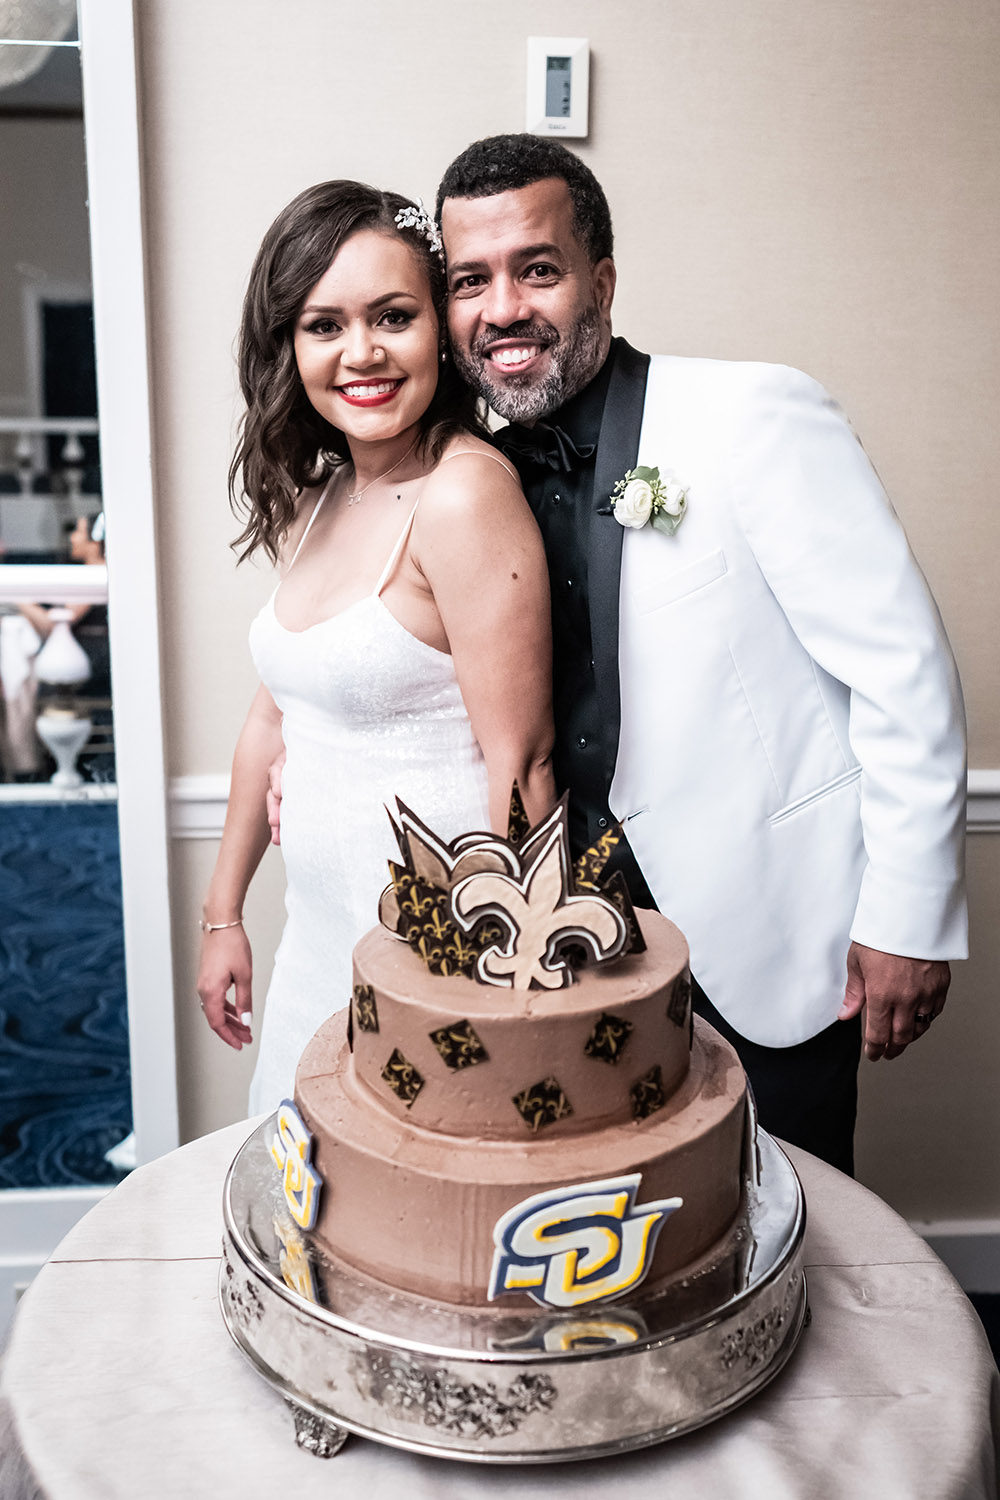 the groom's cake